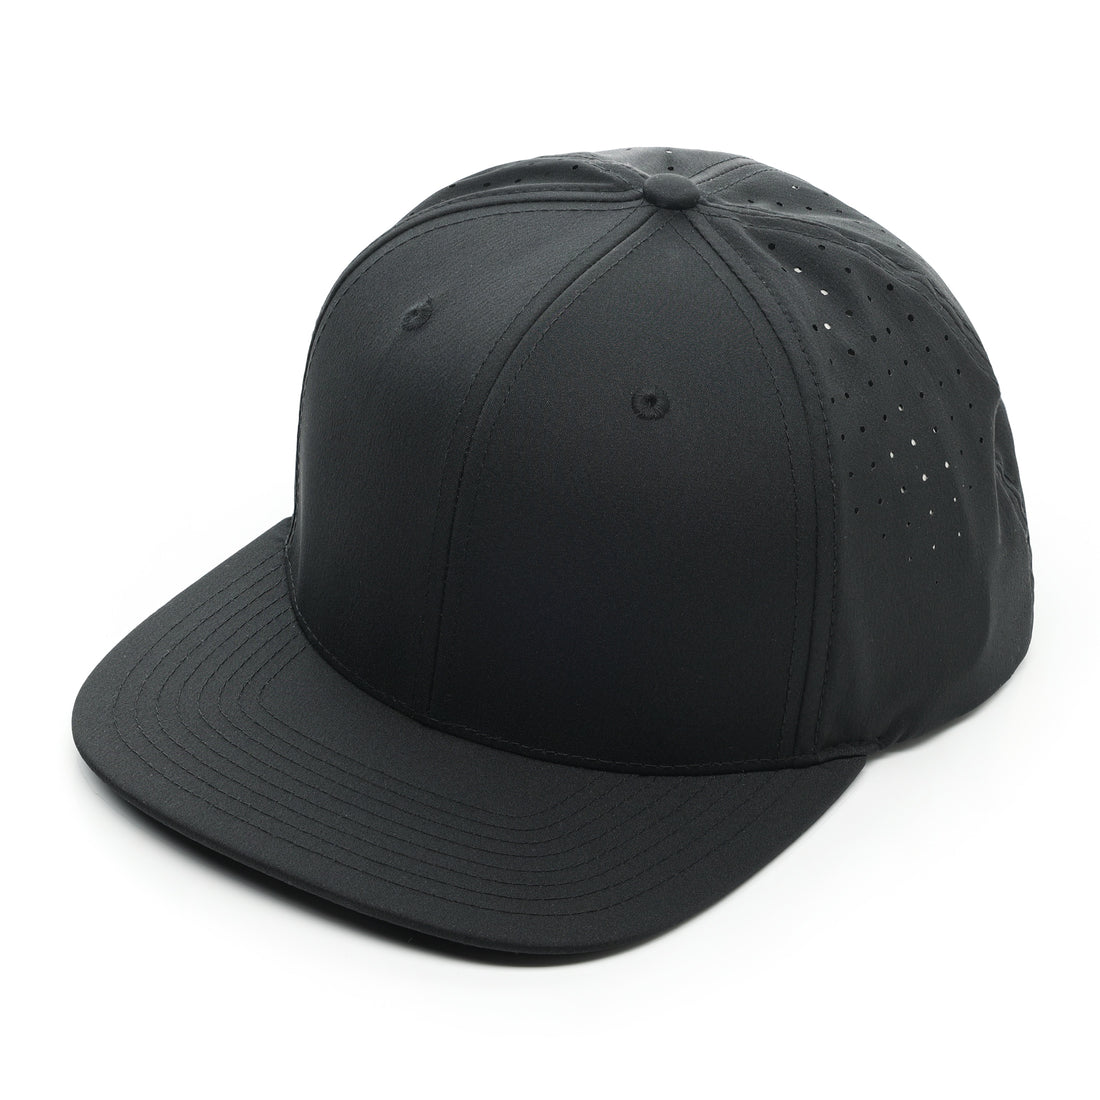 Performance Tech Hat, Melin equivalent, Melin, Black performance hat. Custom branded, branded bills 